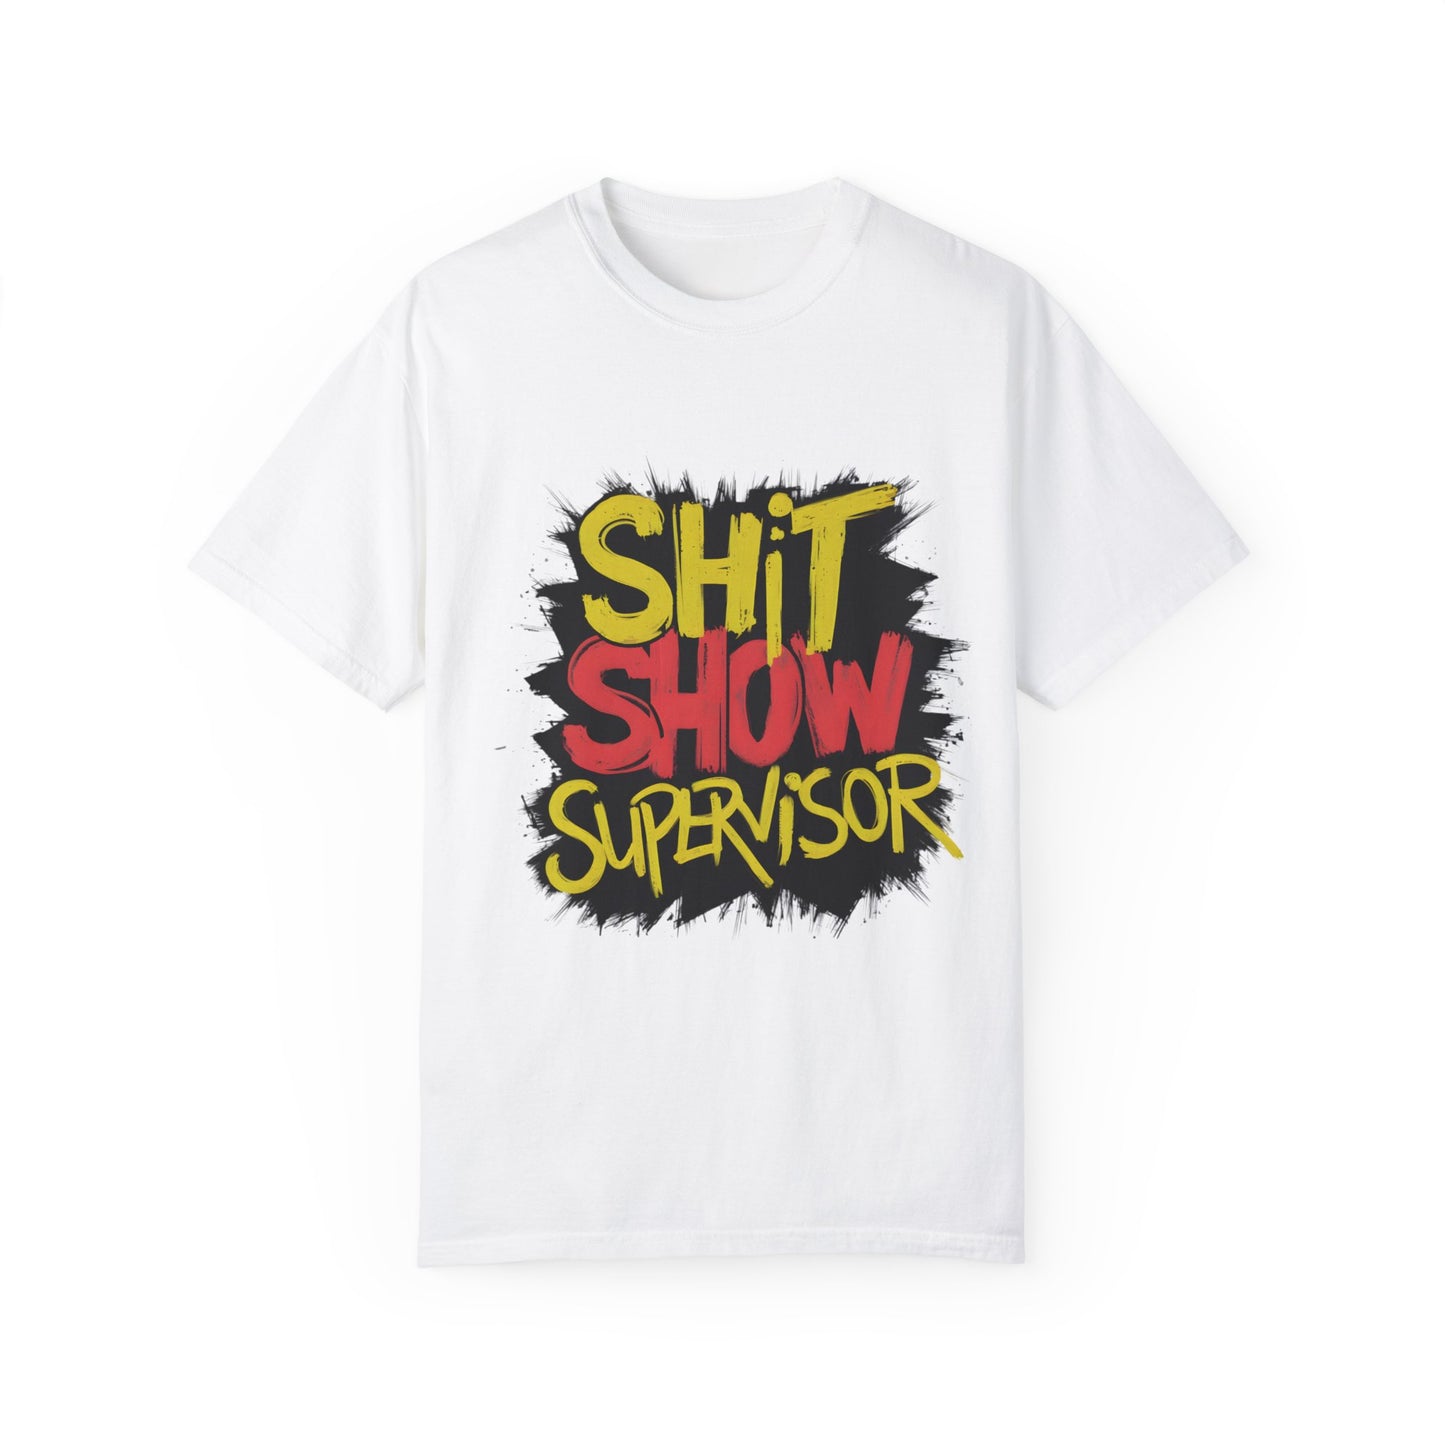 Shit Show Supervisor Urban Sarcastic Graphic Unisex Garment Dyed T-shirt Cotton Funny Humorous Graphic Soft Premium Unisex Men Women White T-shirt Birthday Gift-3